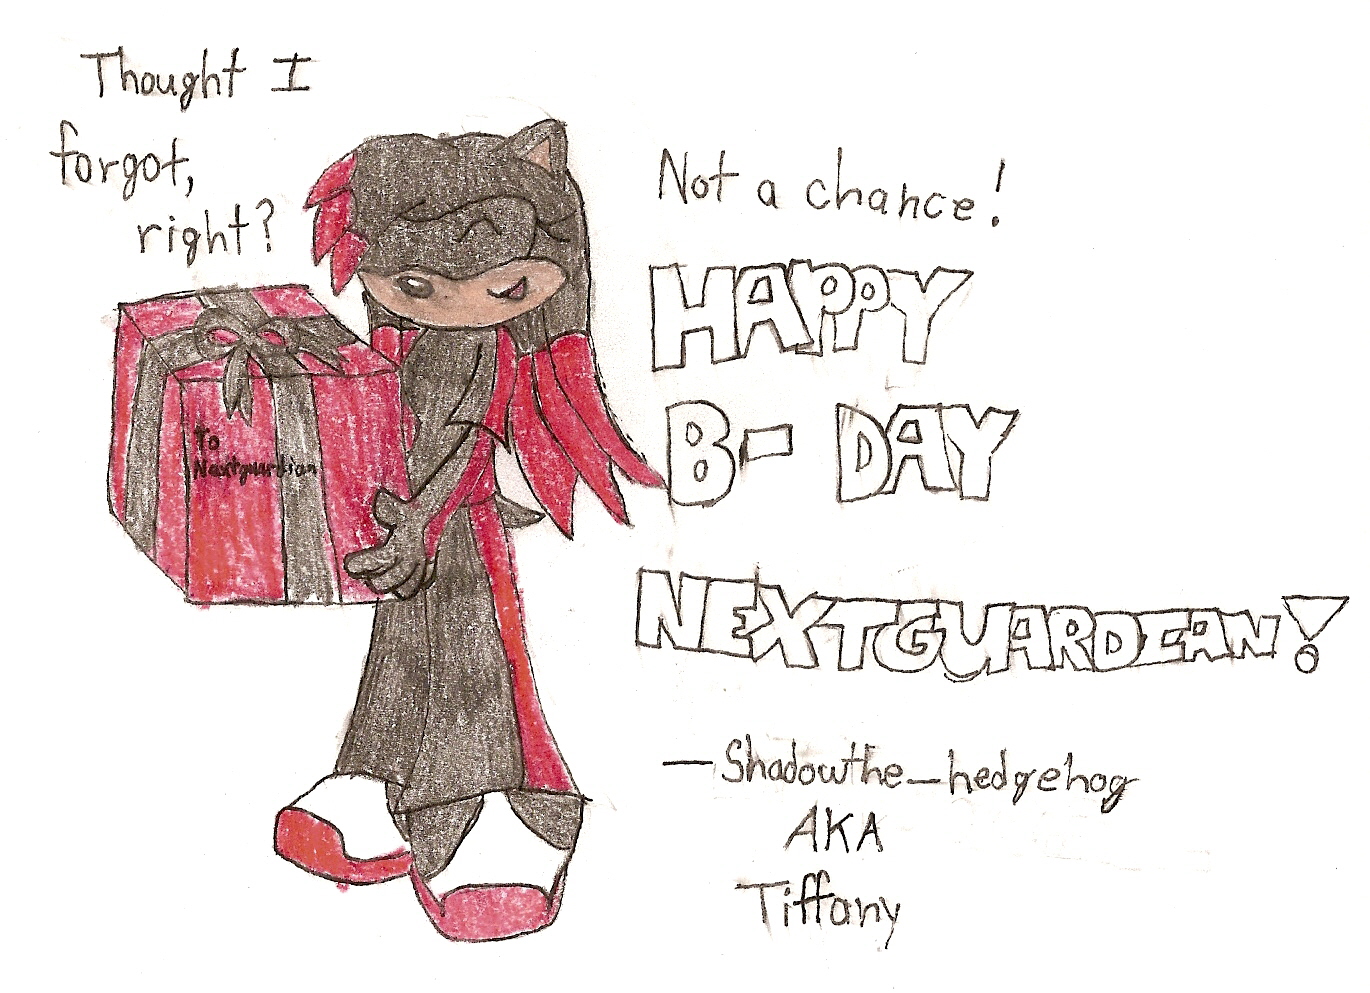 Happy B-day nextguardian by Shadowthe_hedgehog